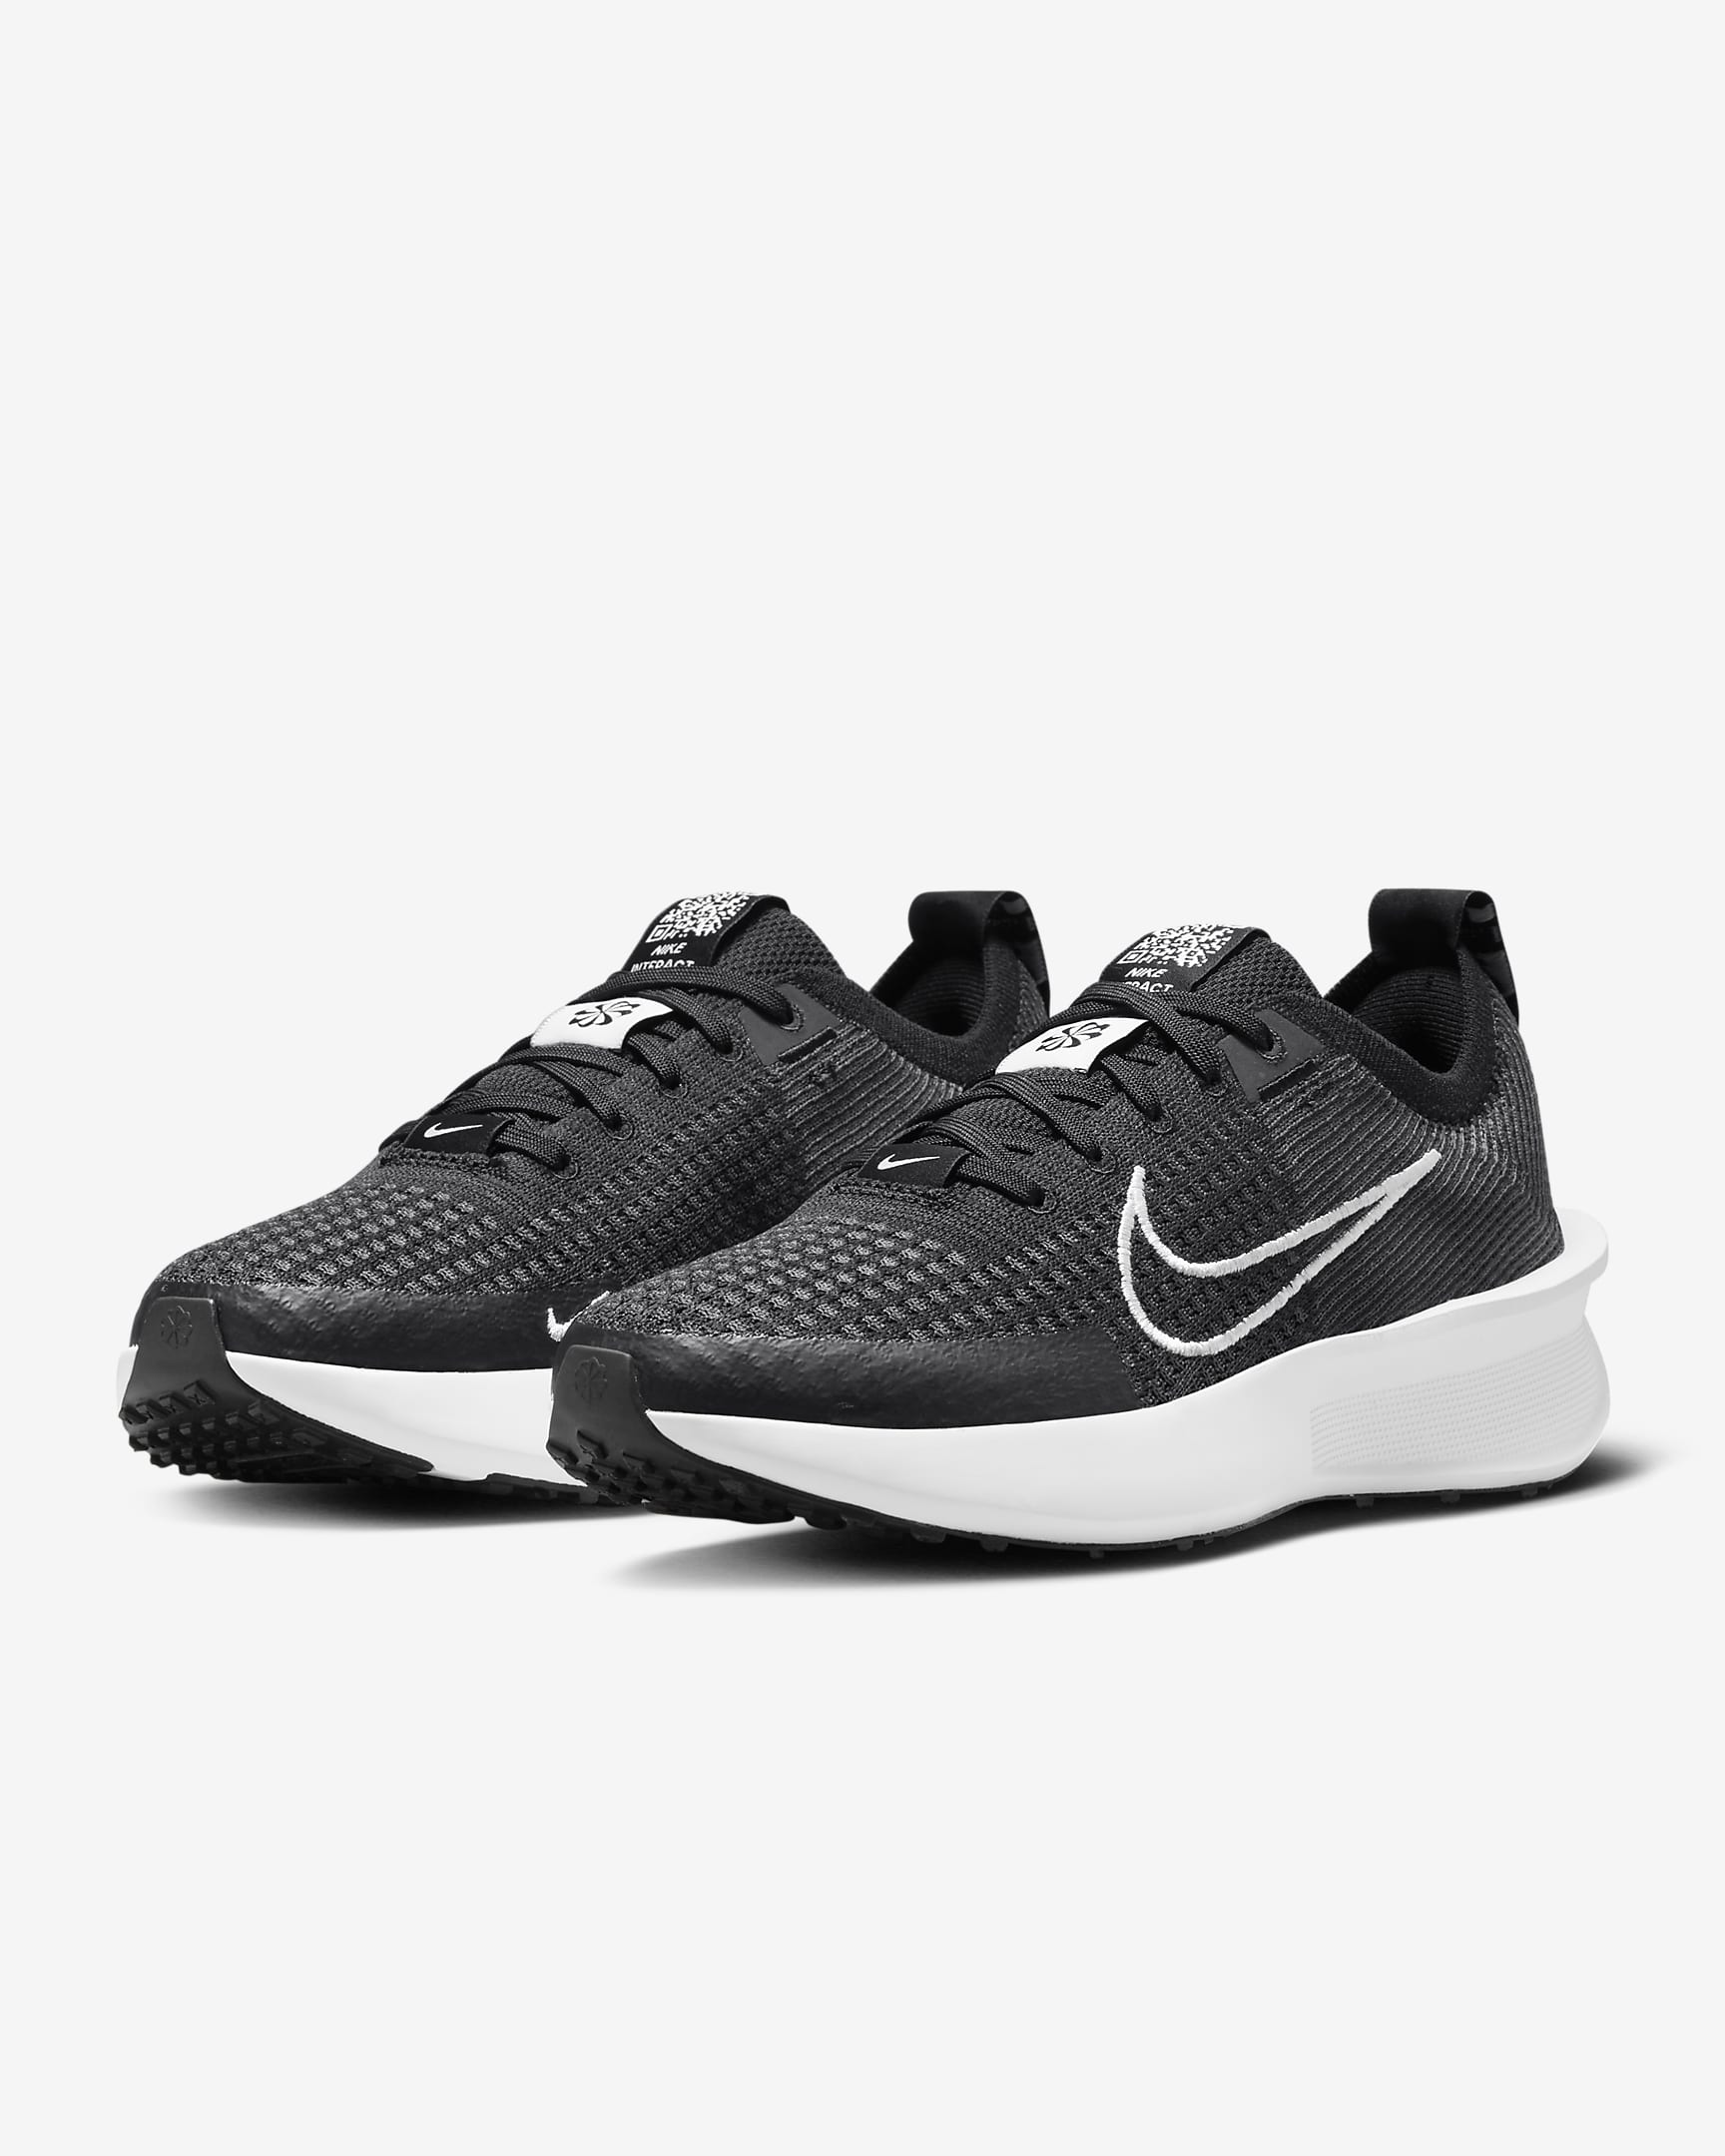 Nike Interact Run Women's Road Running Shoes - Black/Anthracite/White